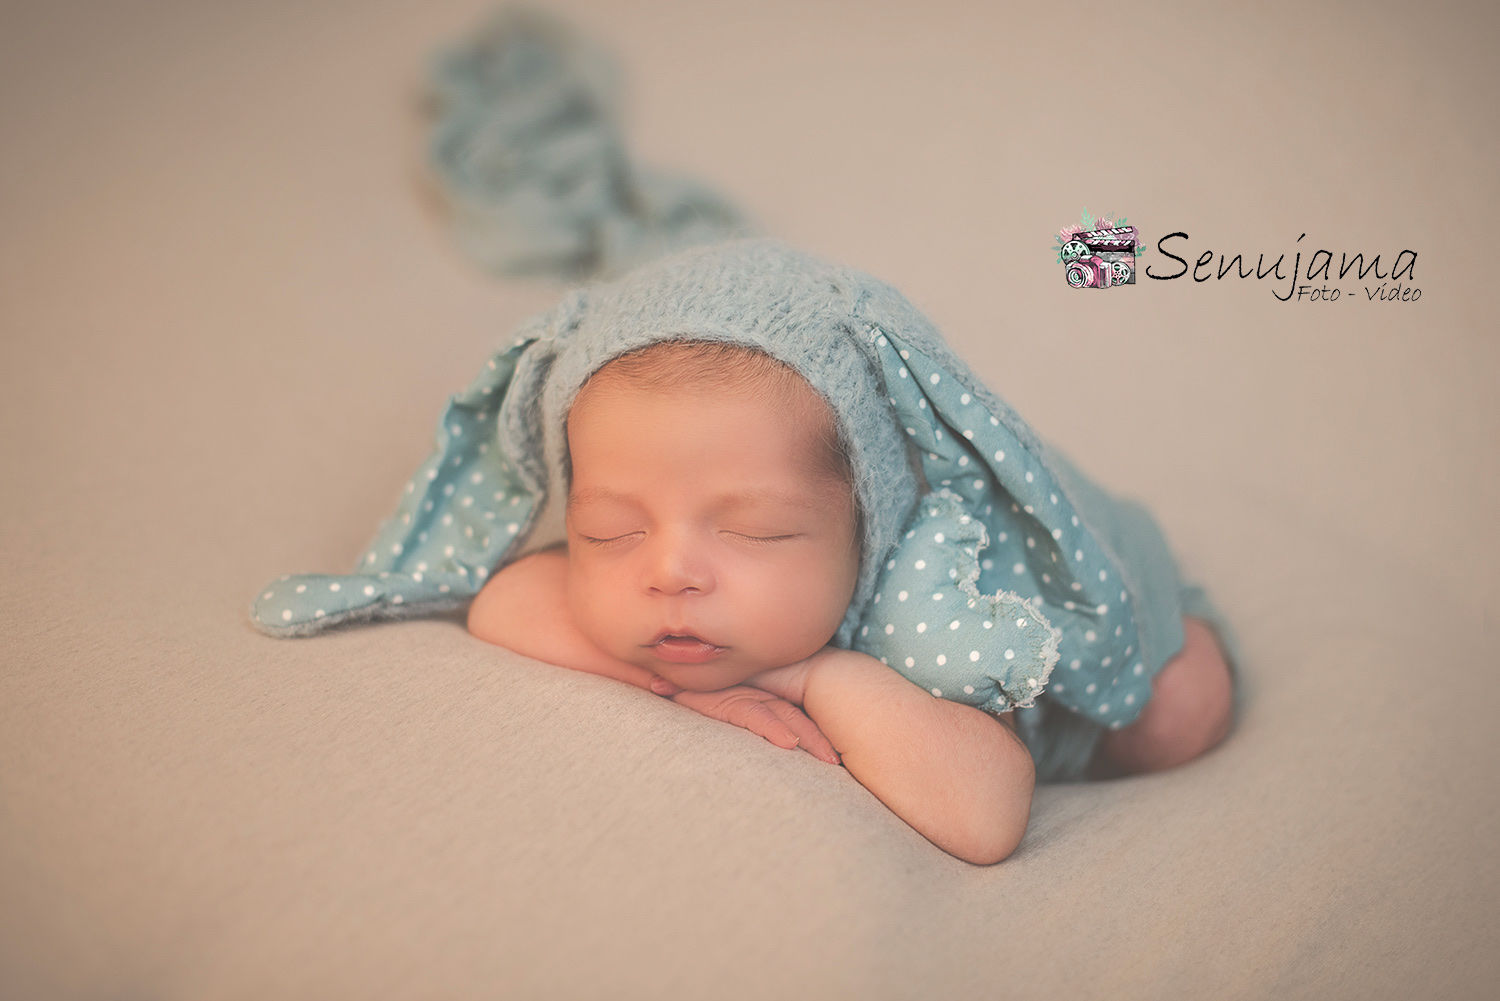 Senujama Foto-Video - fotografia-newborn-recien-nacido-huelva11.jpg